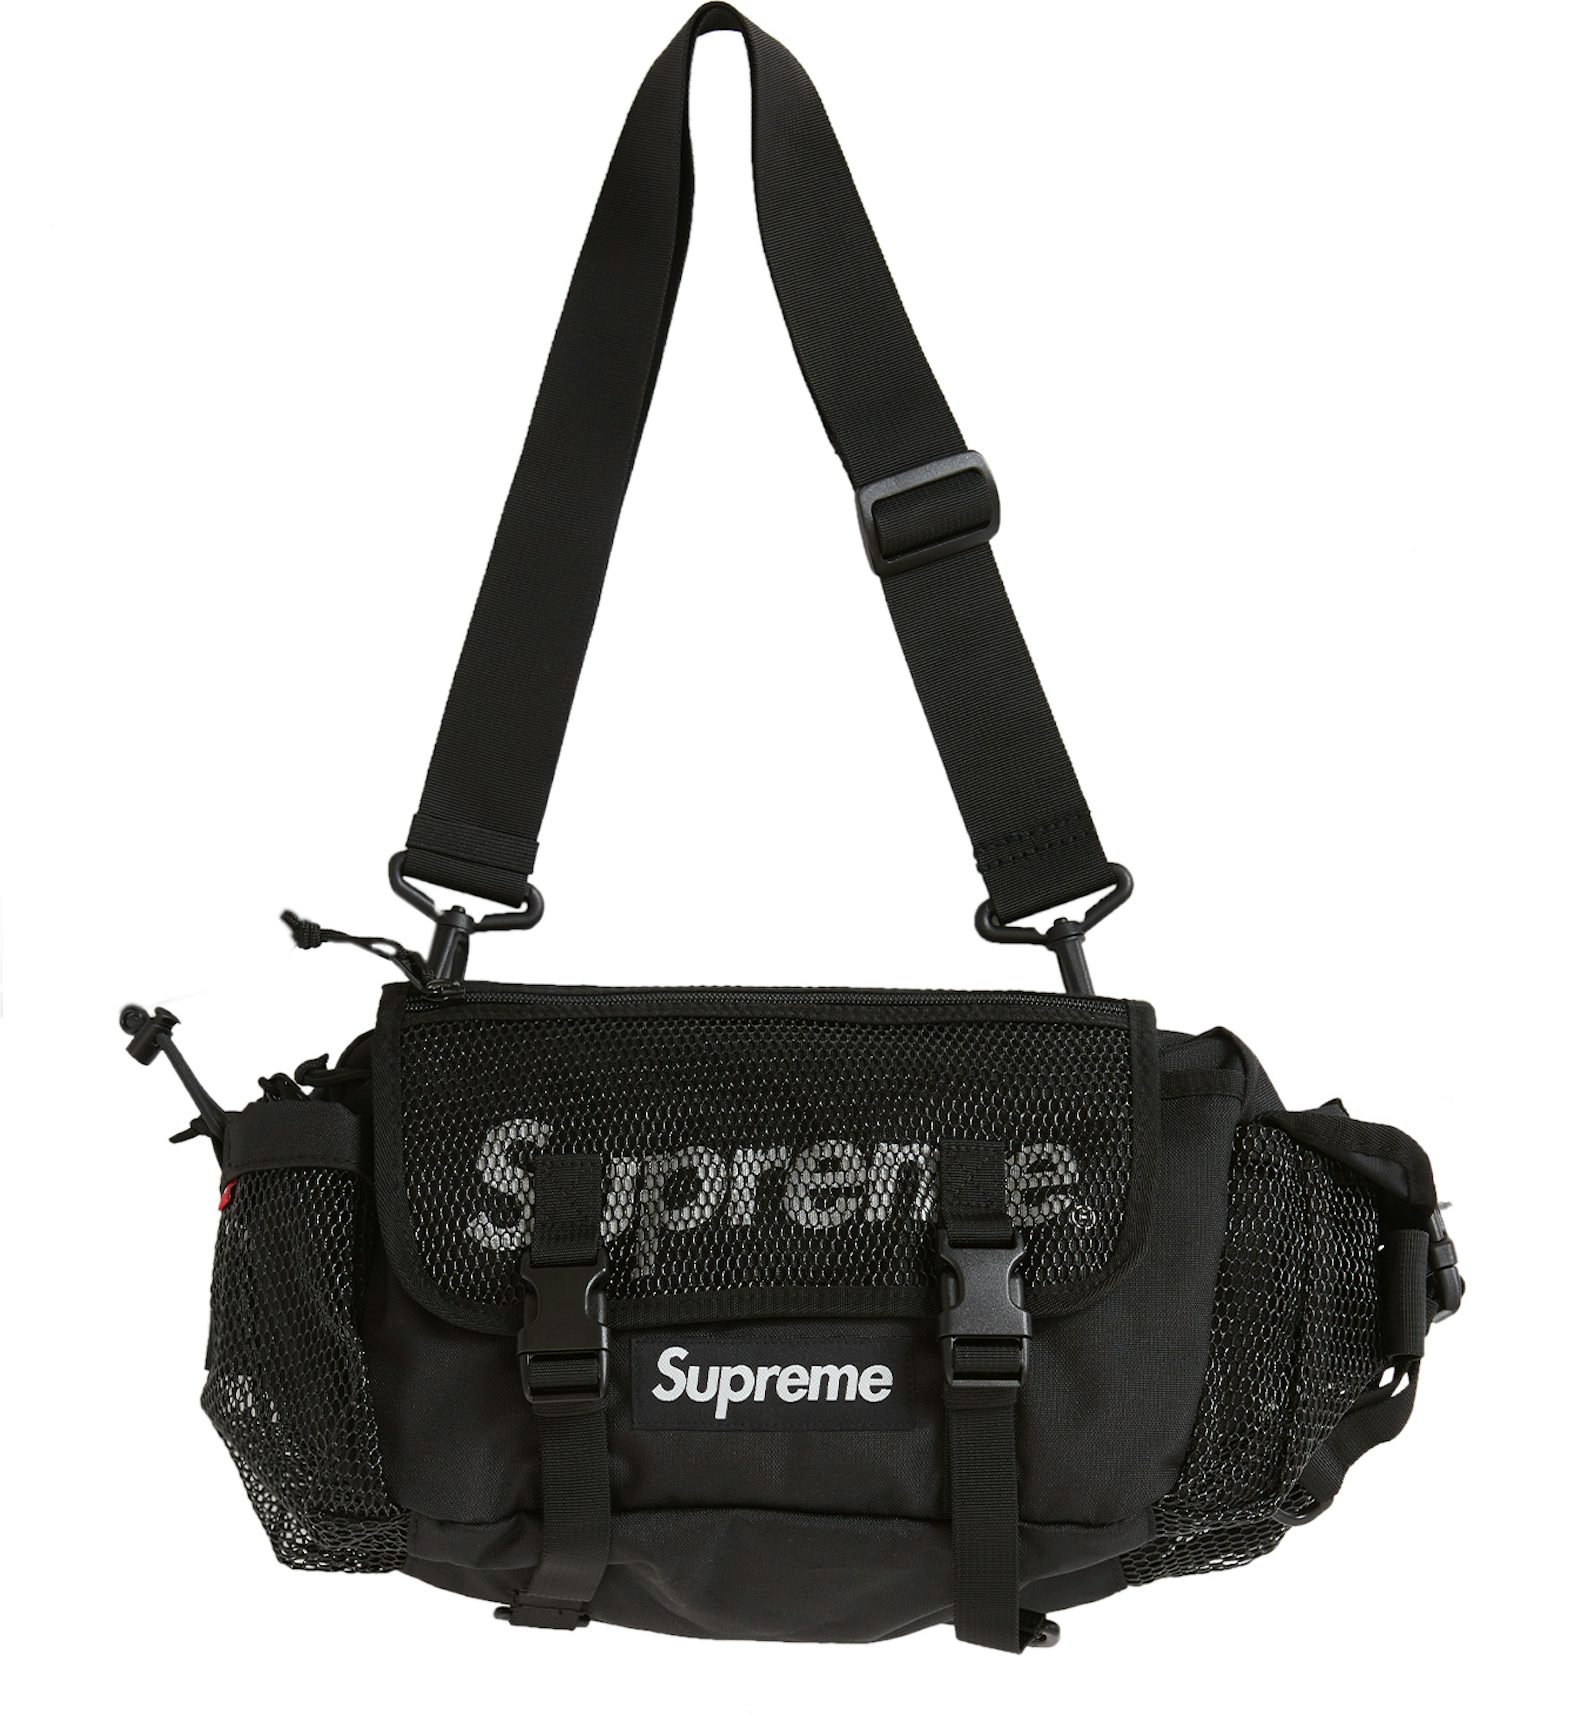 Supreme Backpack (FW18) Black - StockX News